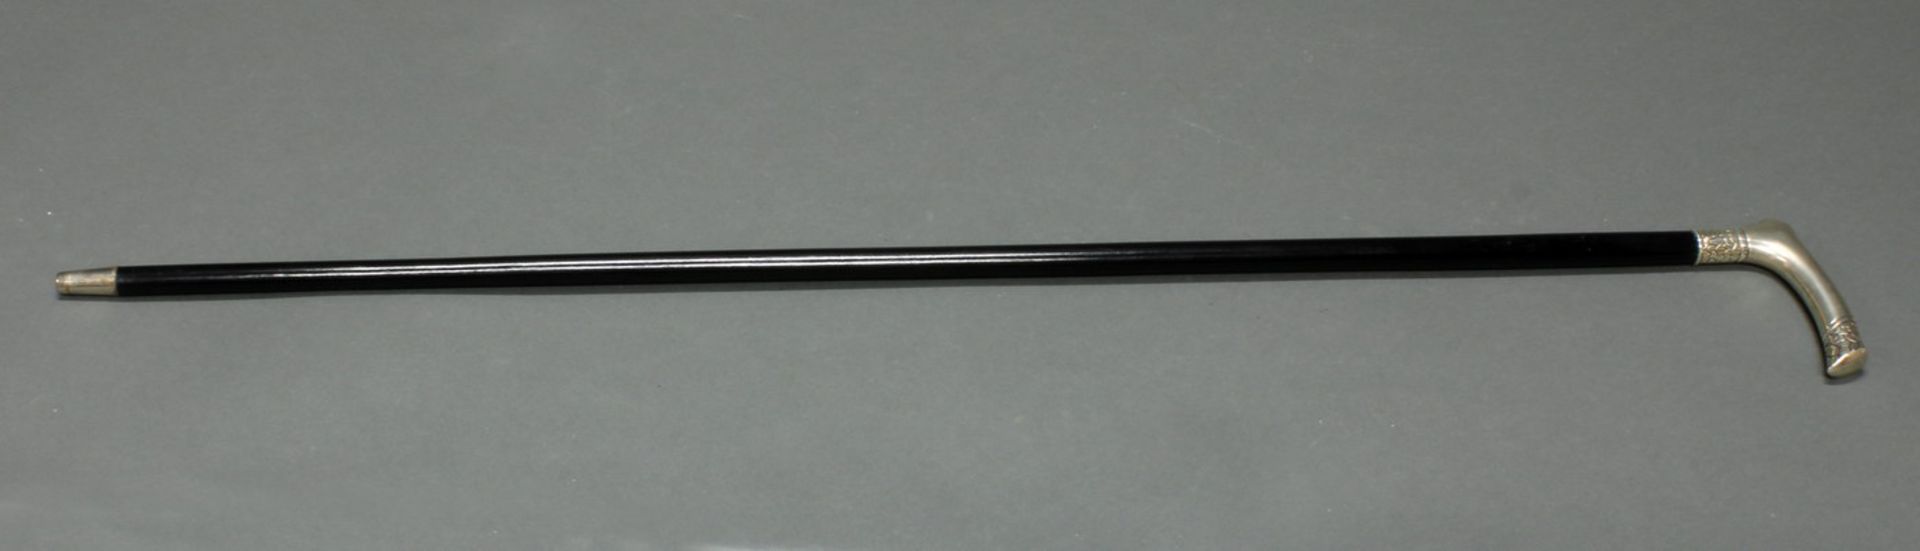 Flanierstock, deutsch, Anfang 20. Jh., Krücke aus Silber 800, schwarzer Holzschuss, 86 cm hoch- - - - Bild 5 aus 6